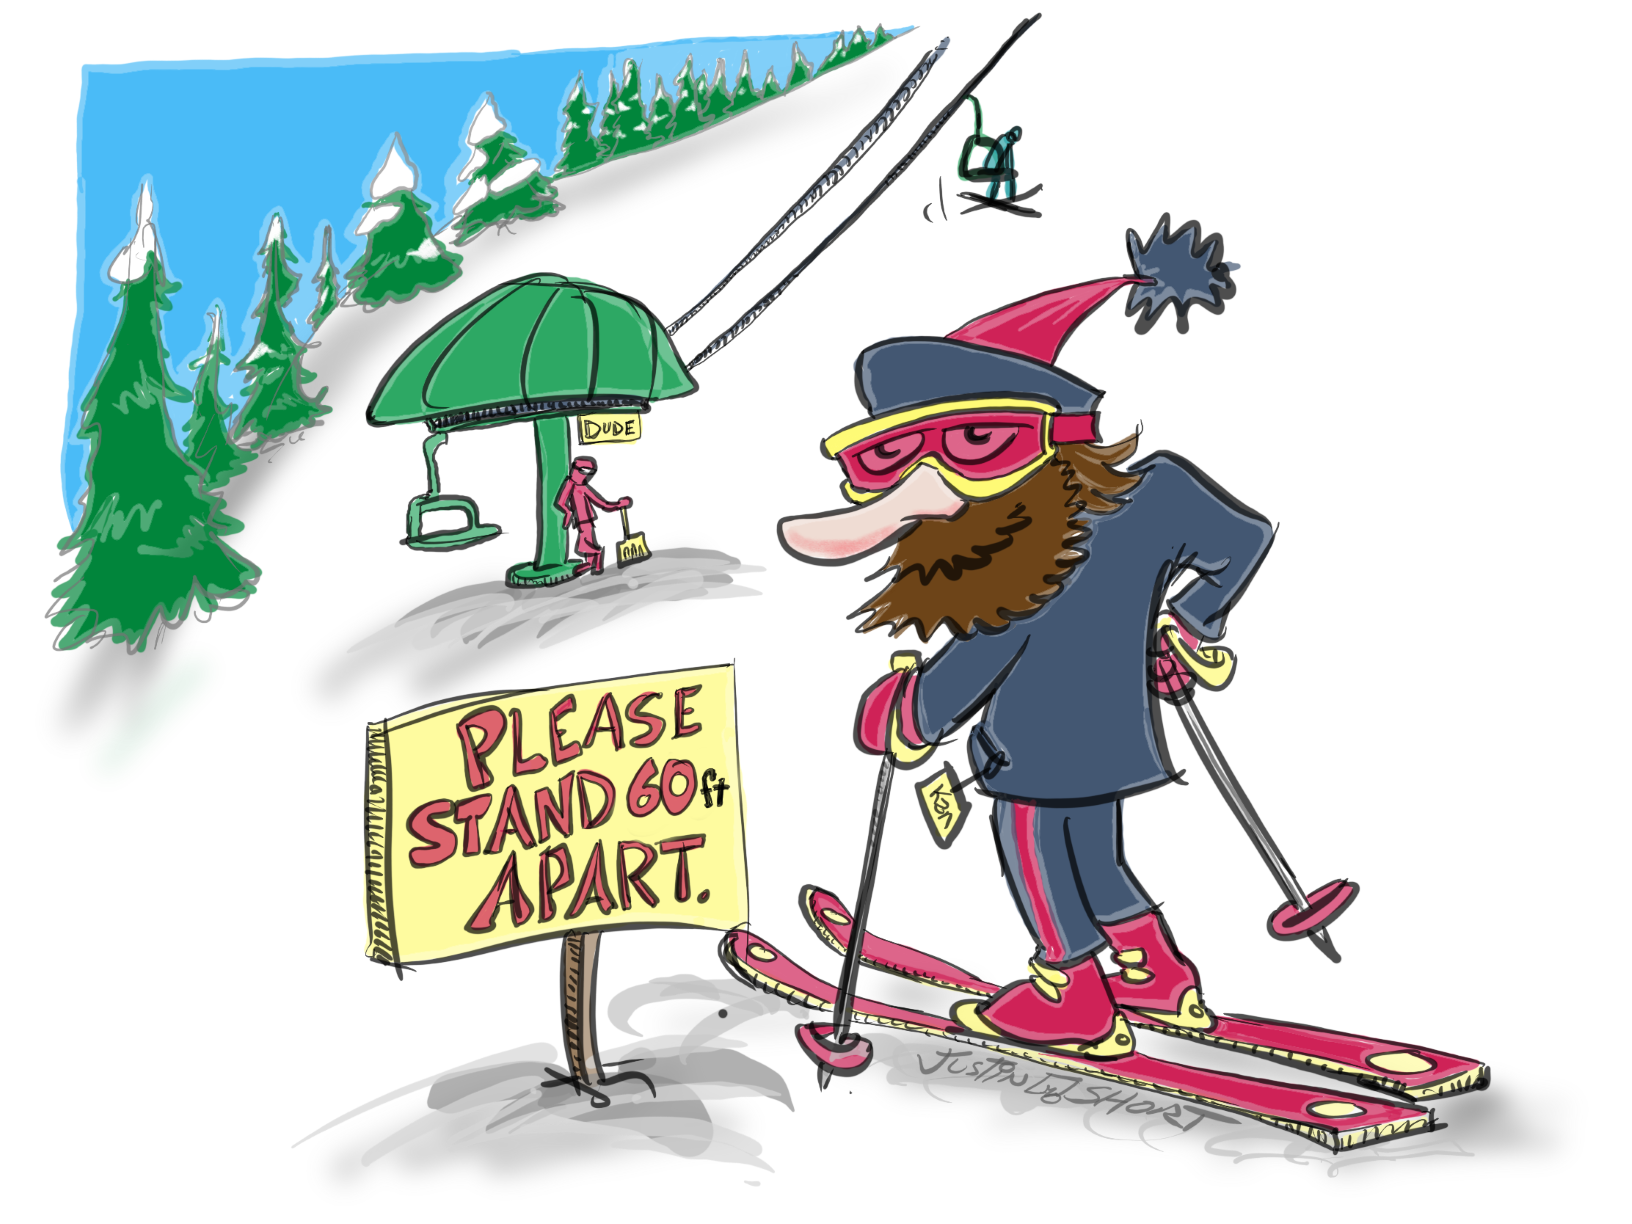 Socially distanced skiing illustration by Justin Short.